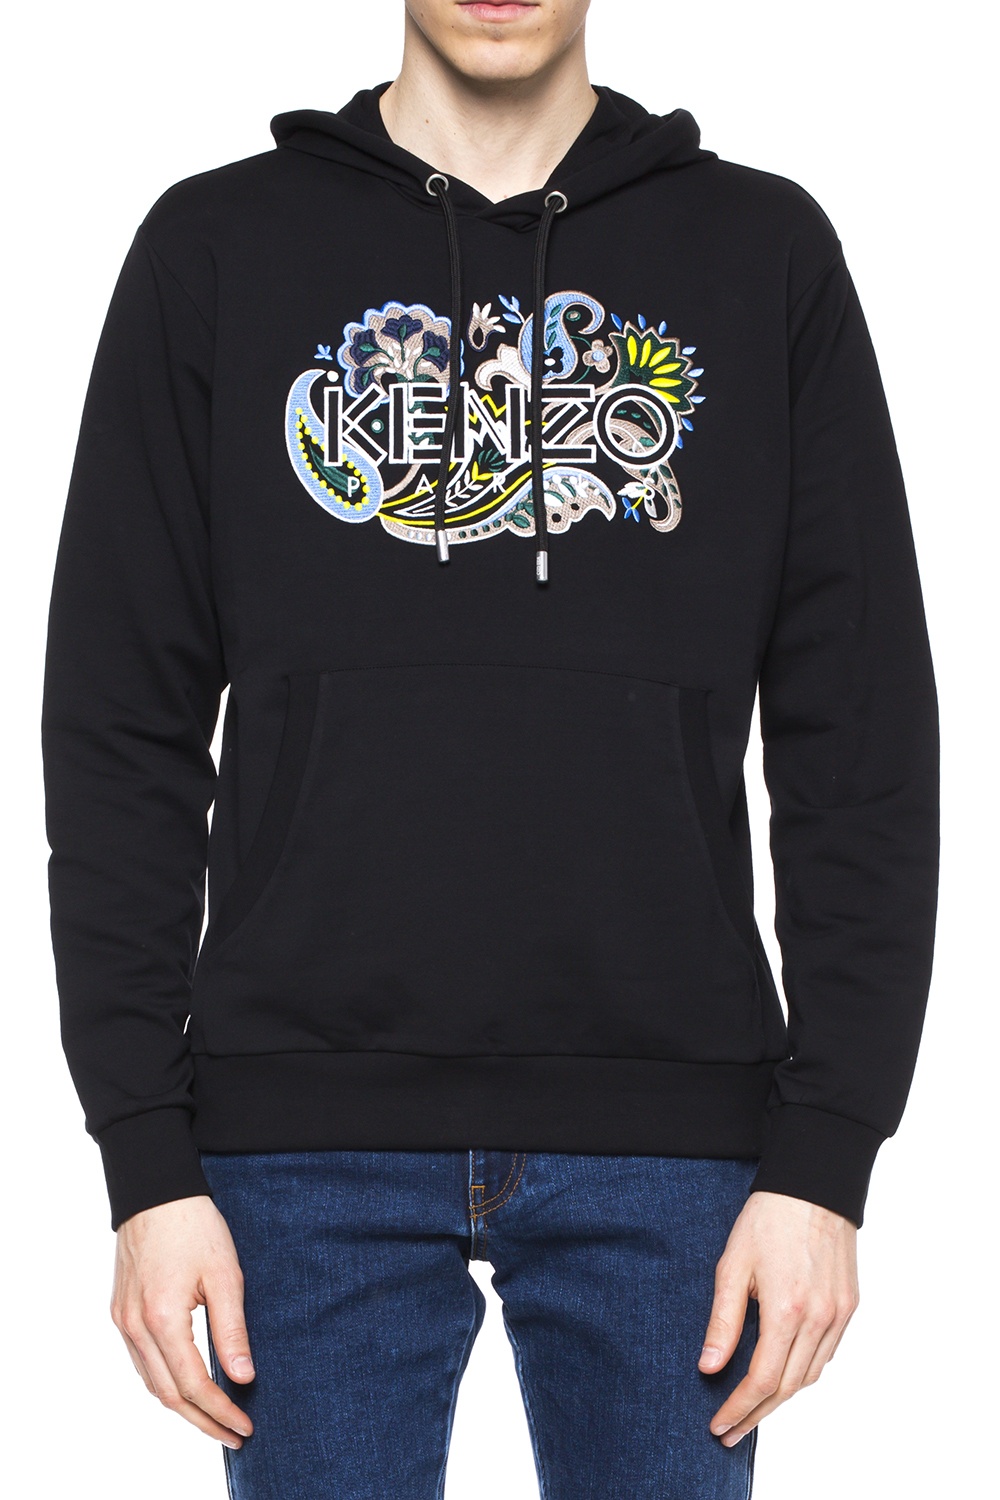 kenzo floral sweatshirt